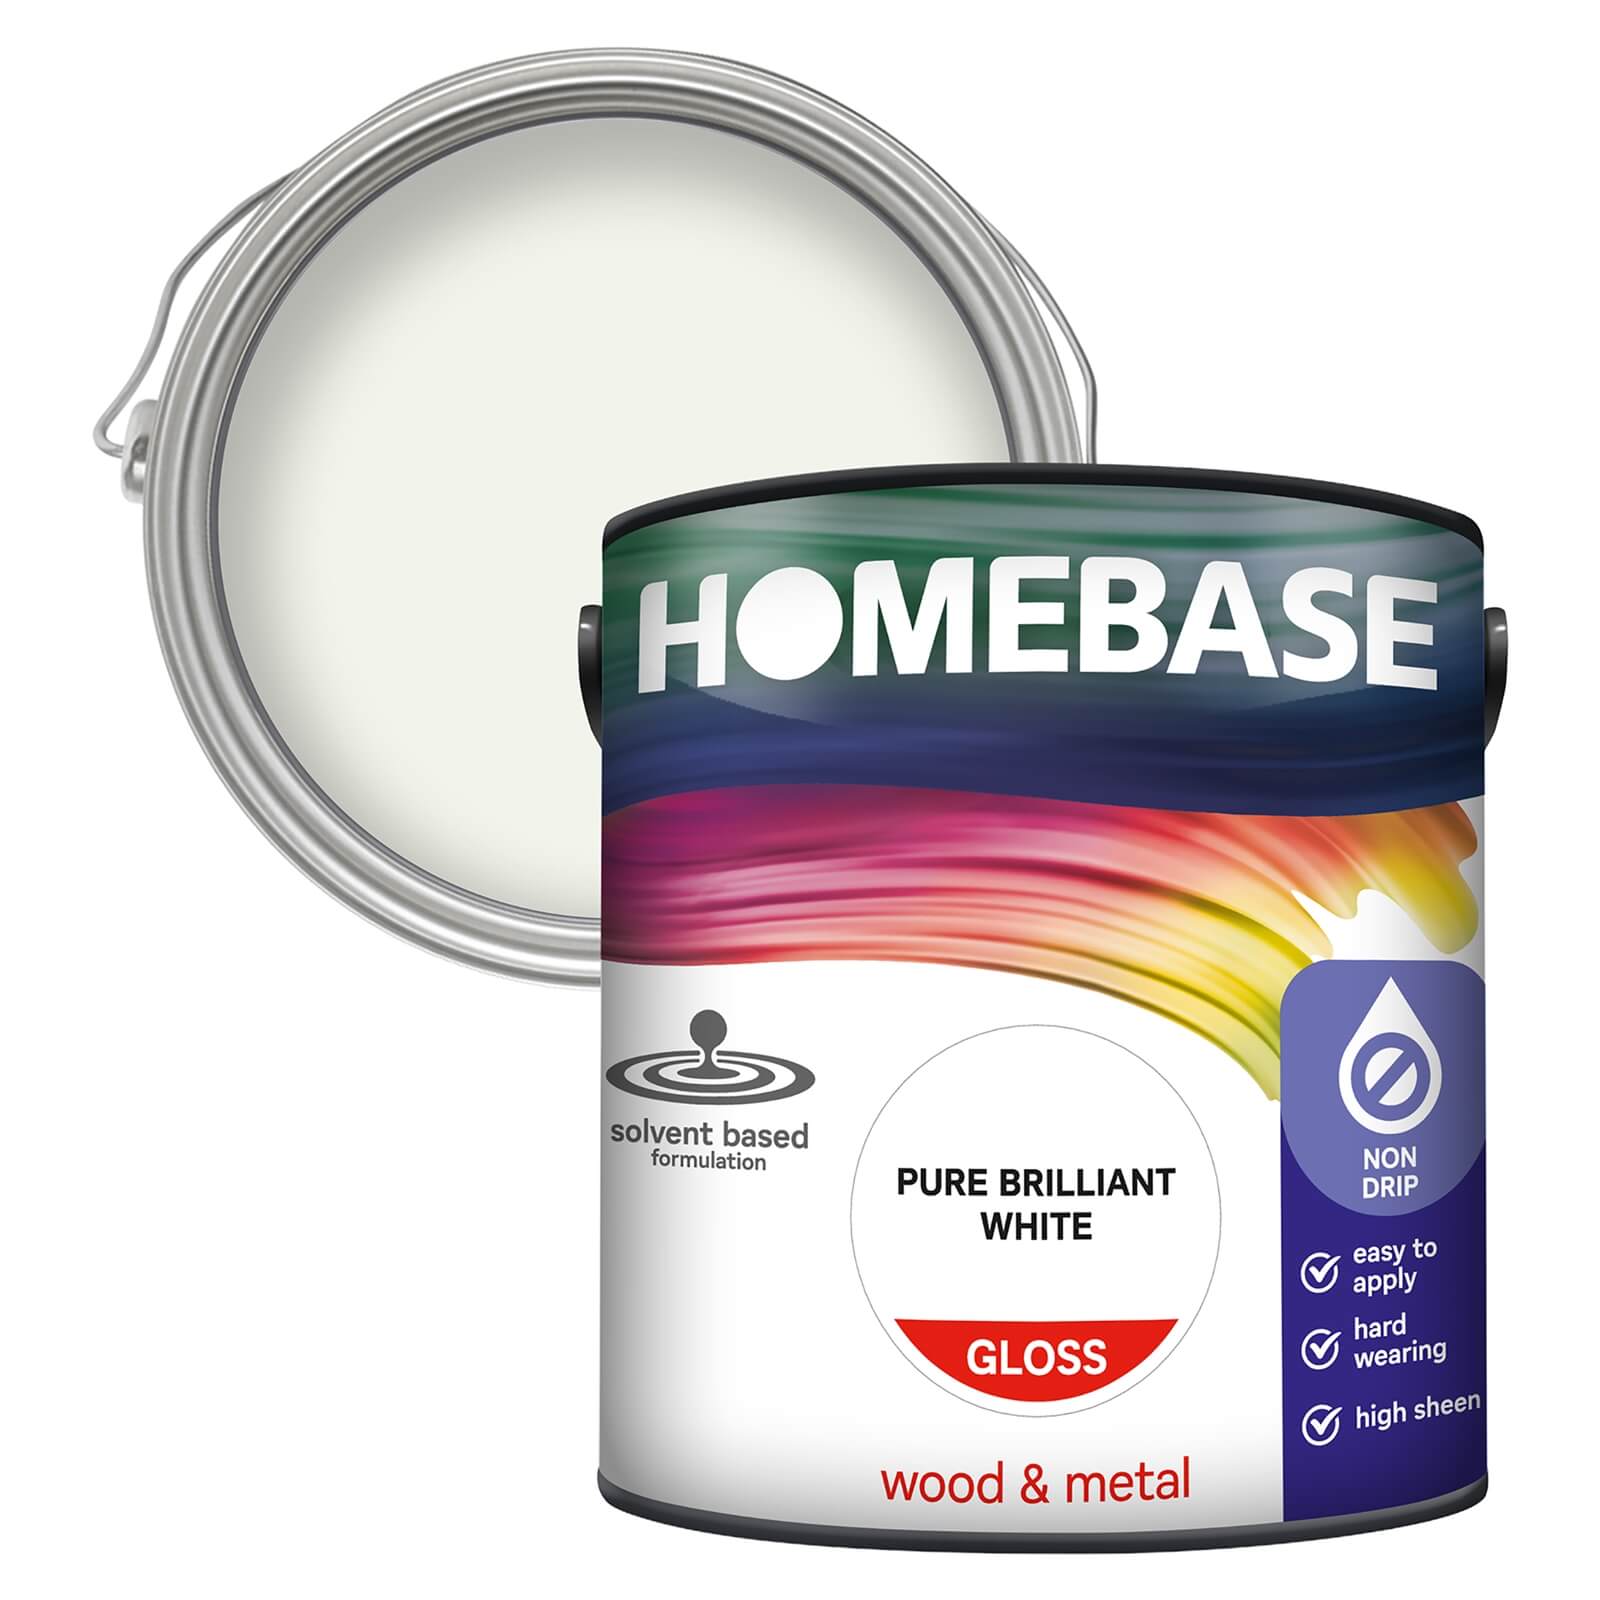 Homebase Non Drip Gloss Pure Brilliant White - 2.5L